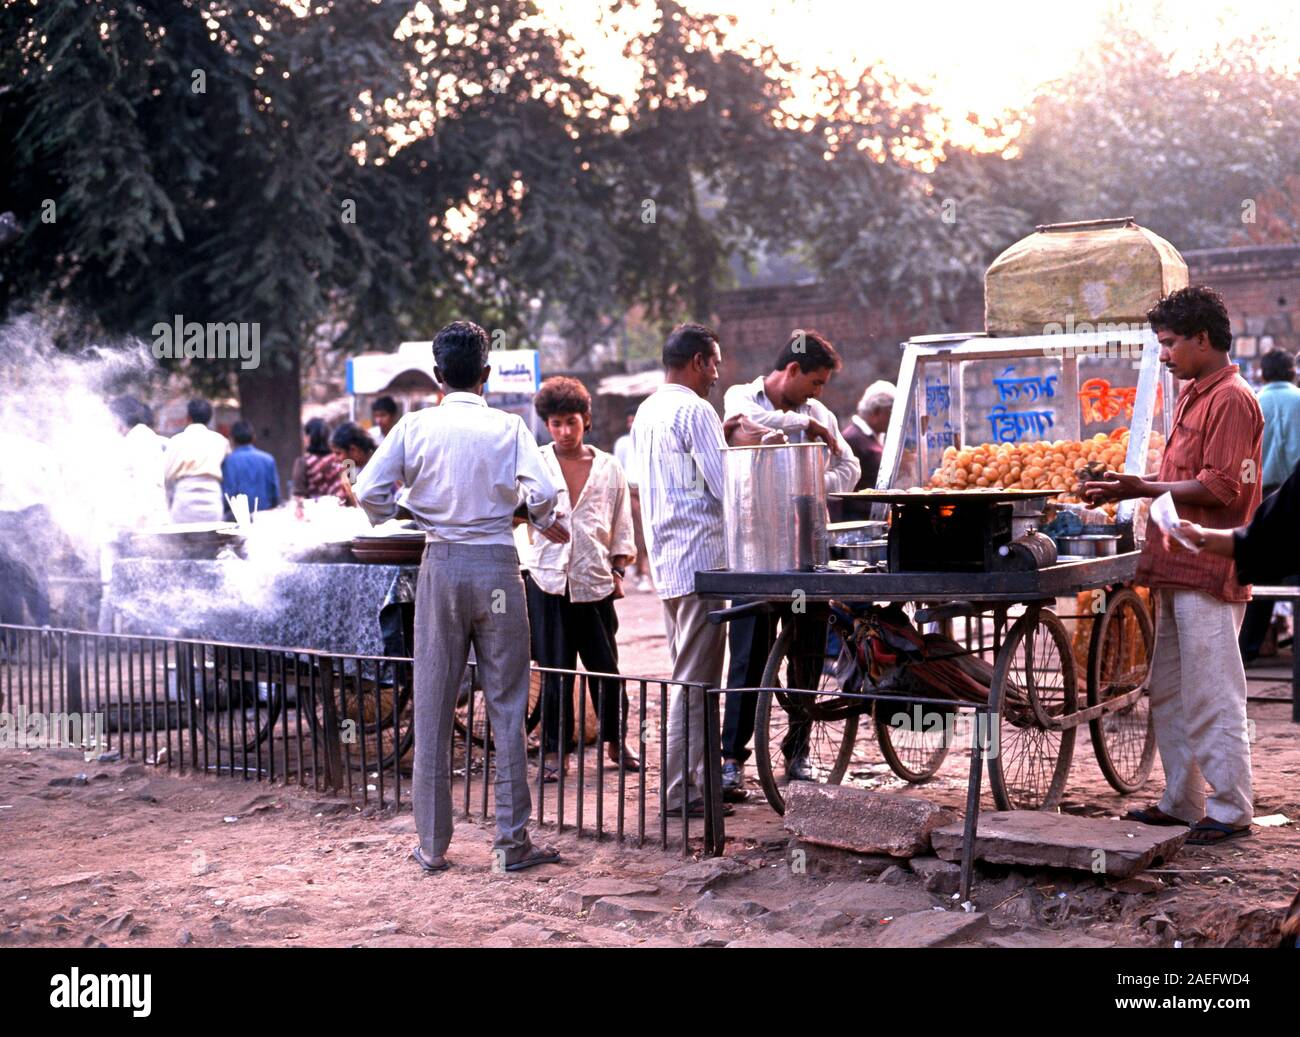 Roadside food stalls near the Qutb Minar, Delhi, Delhi Union Territory, India. Stock Photo